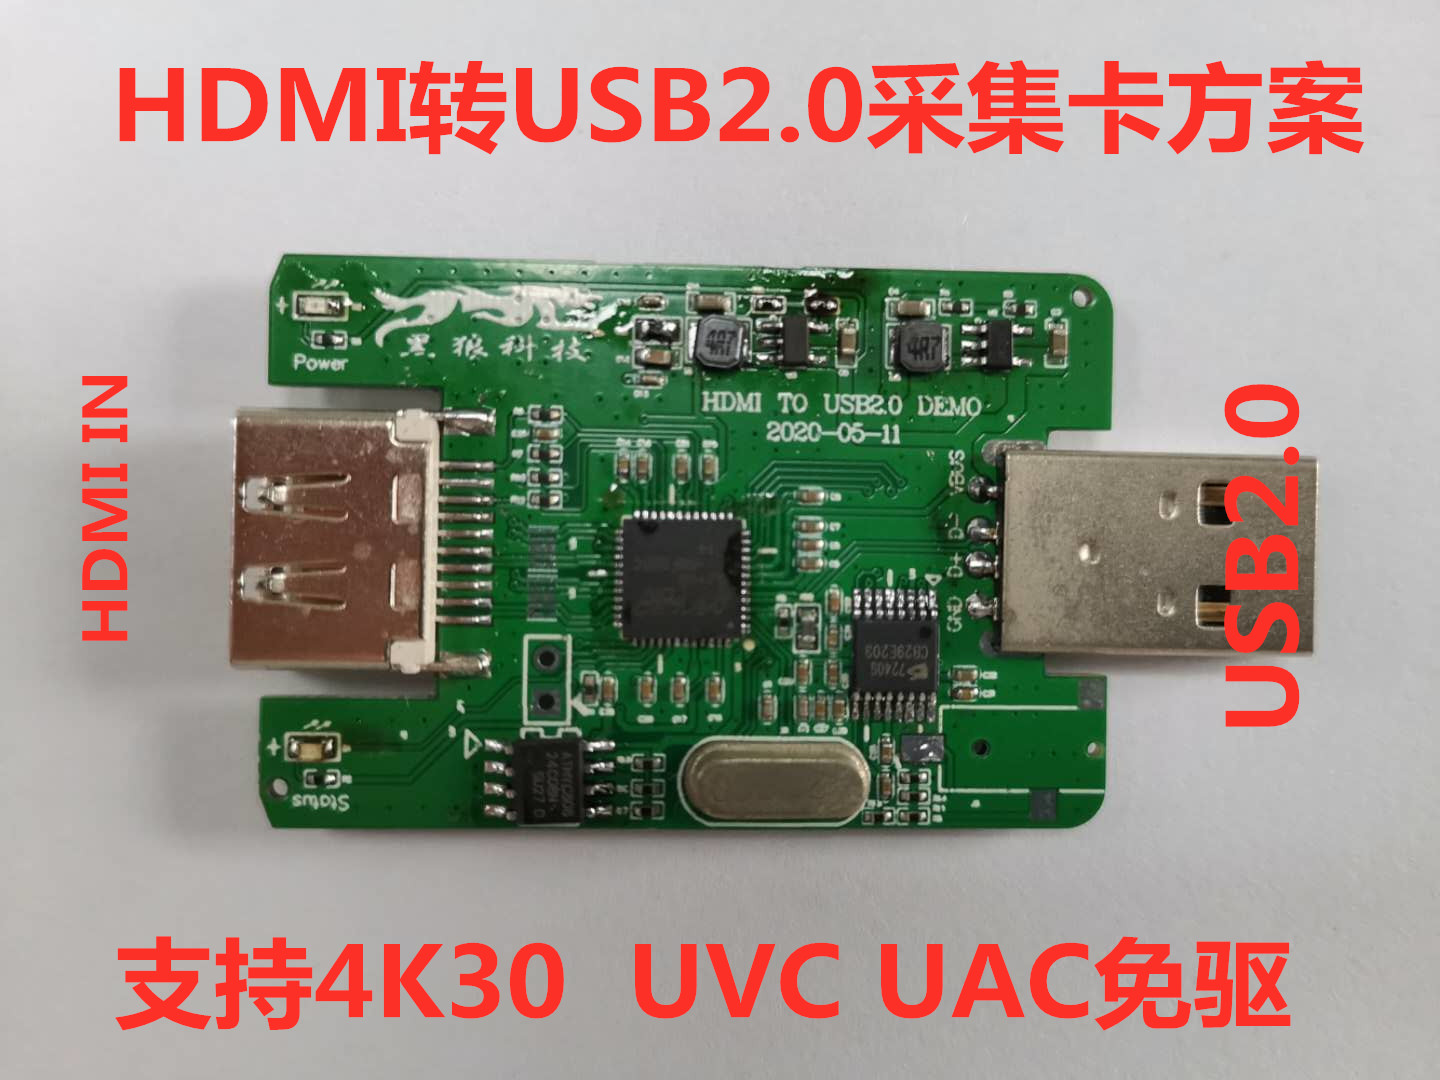 HDMI转USB2.0采集卡方案 支持4K30输入 支持定制 UVC免驱